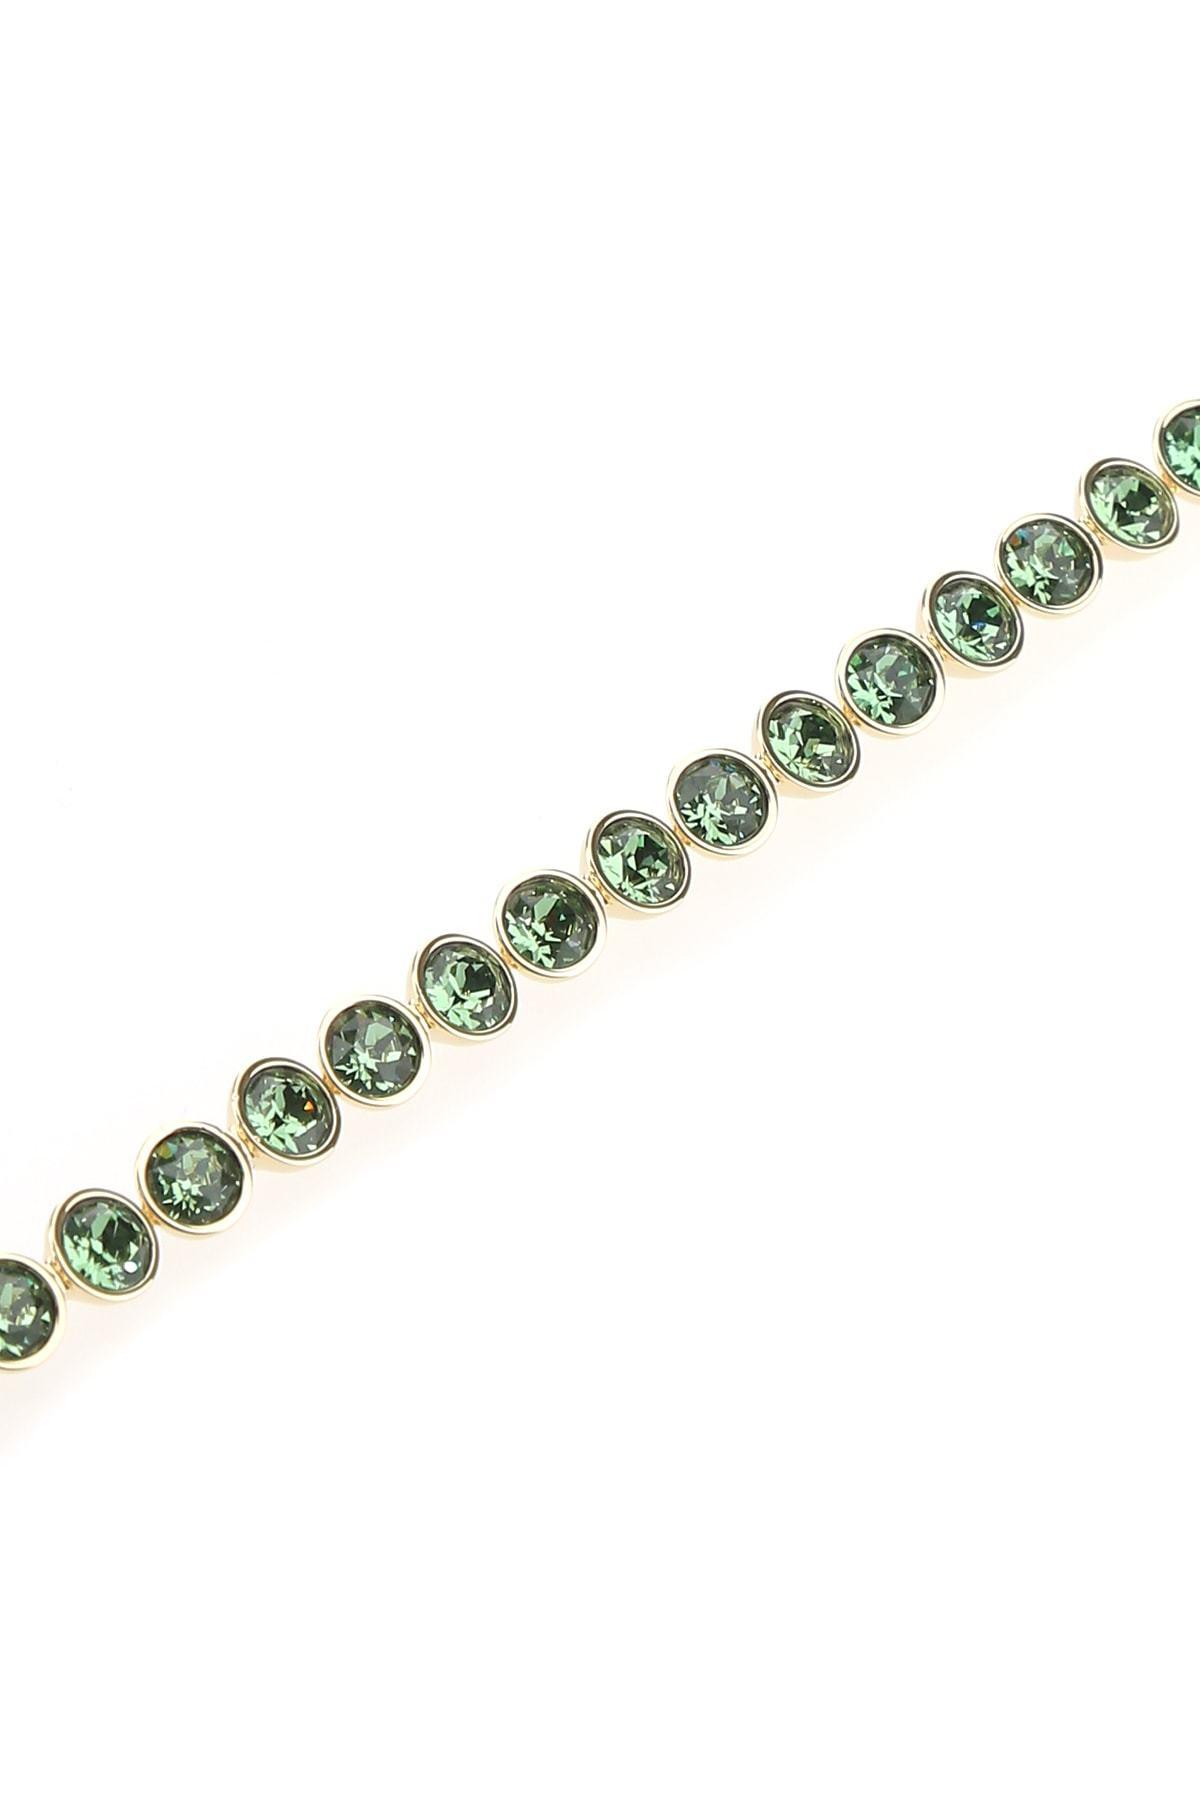 Buy Swarovski Crystal Bracelet French Knit Sterling Silver Online in India  - Etsy